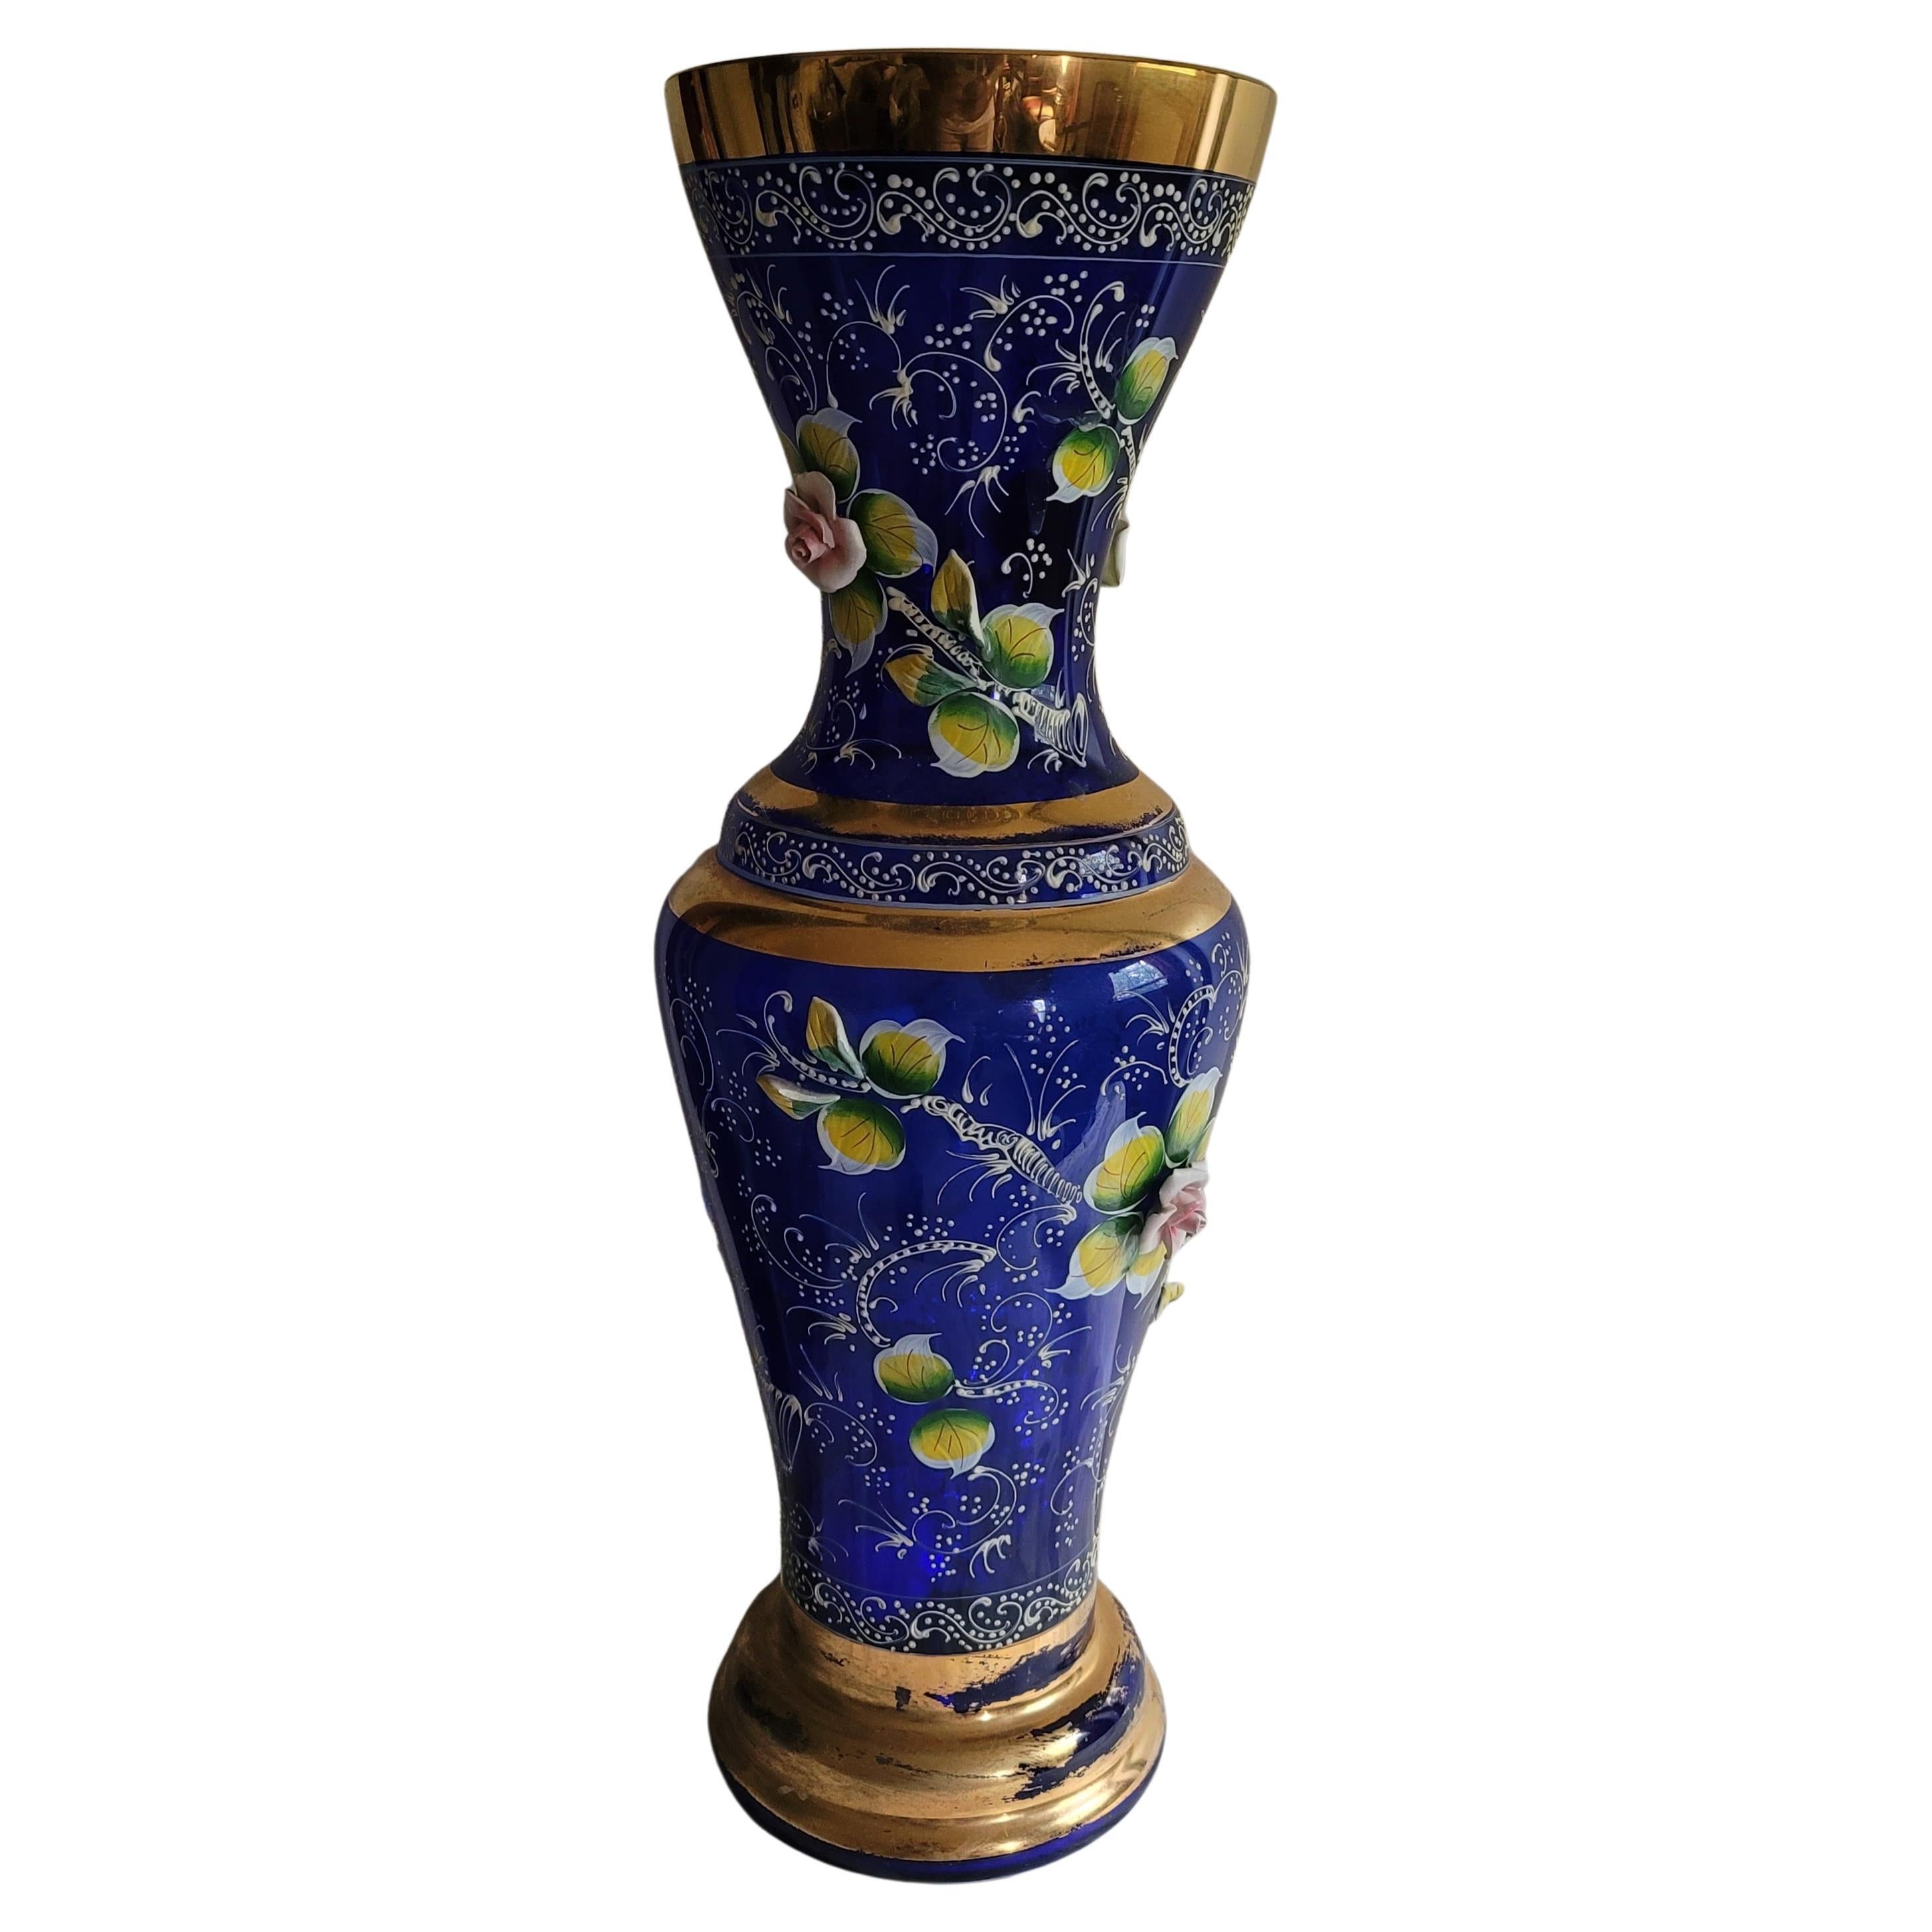 Large Vintage Bohemian Cobalt Blue Gilt and Enameled Art, raised flowers , Hand Painted Glass Vase.
Measures 8